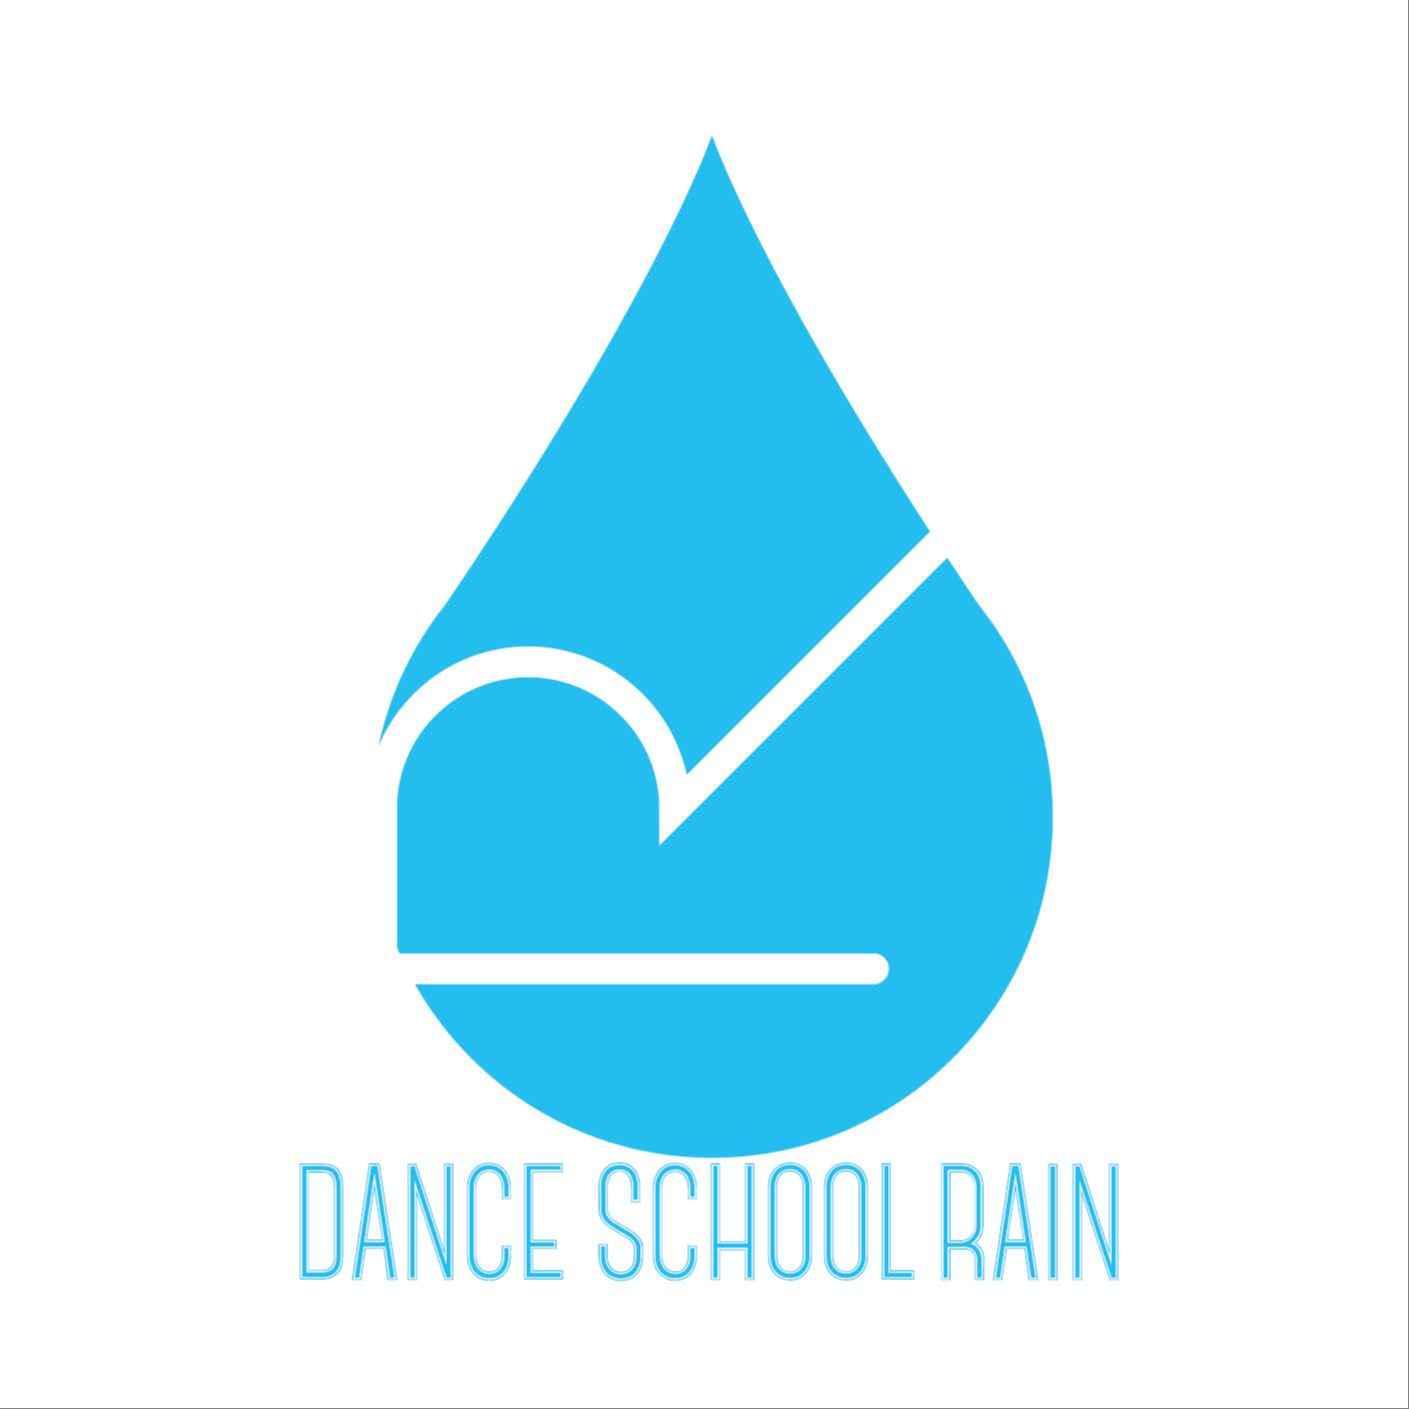 DANCE SCHOOL RAIN